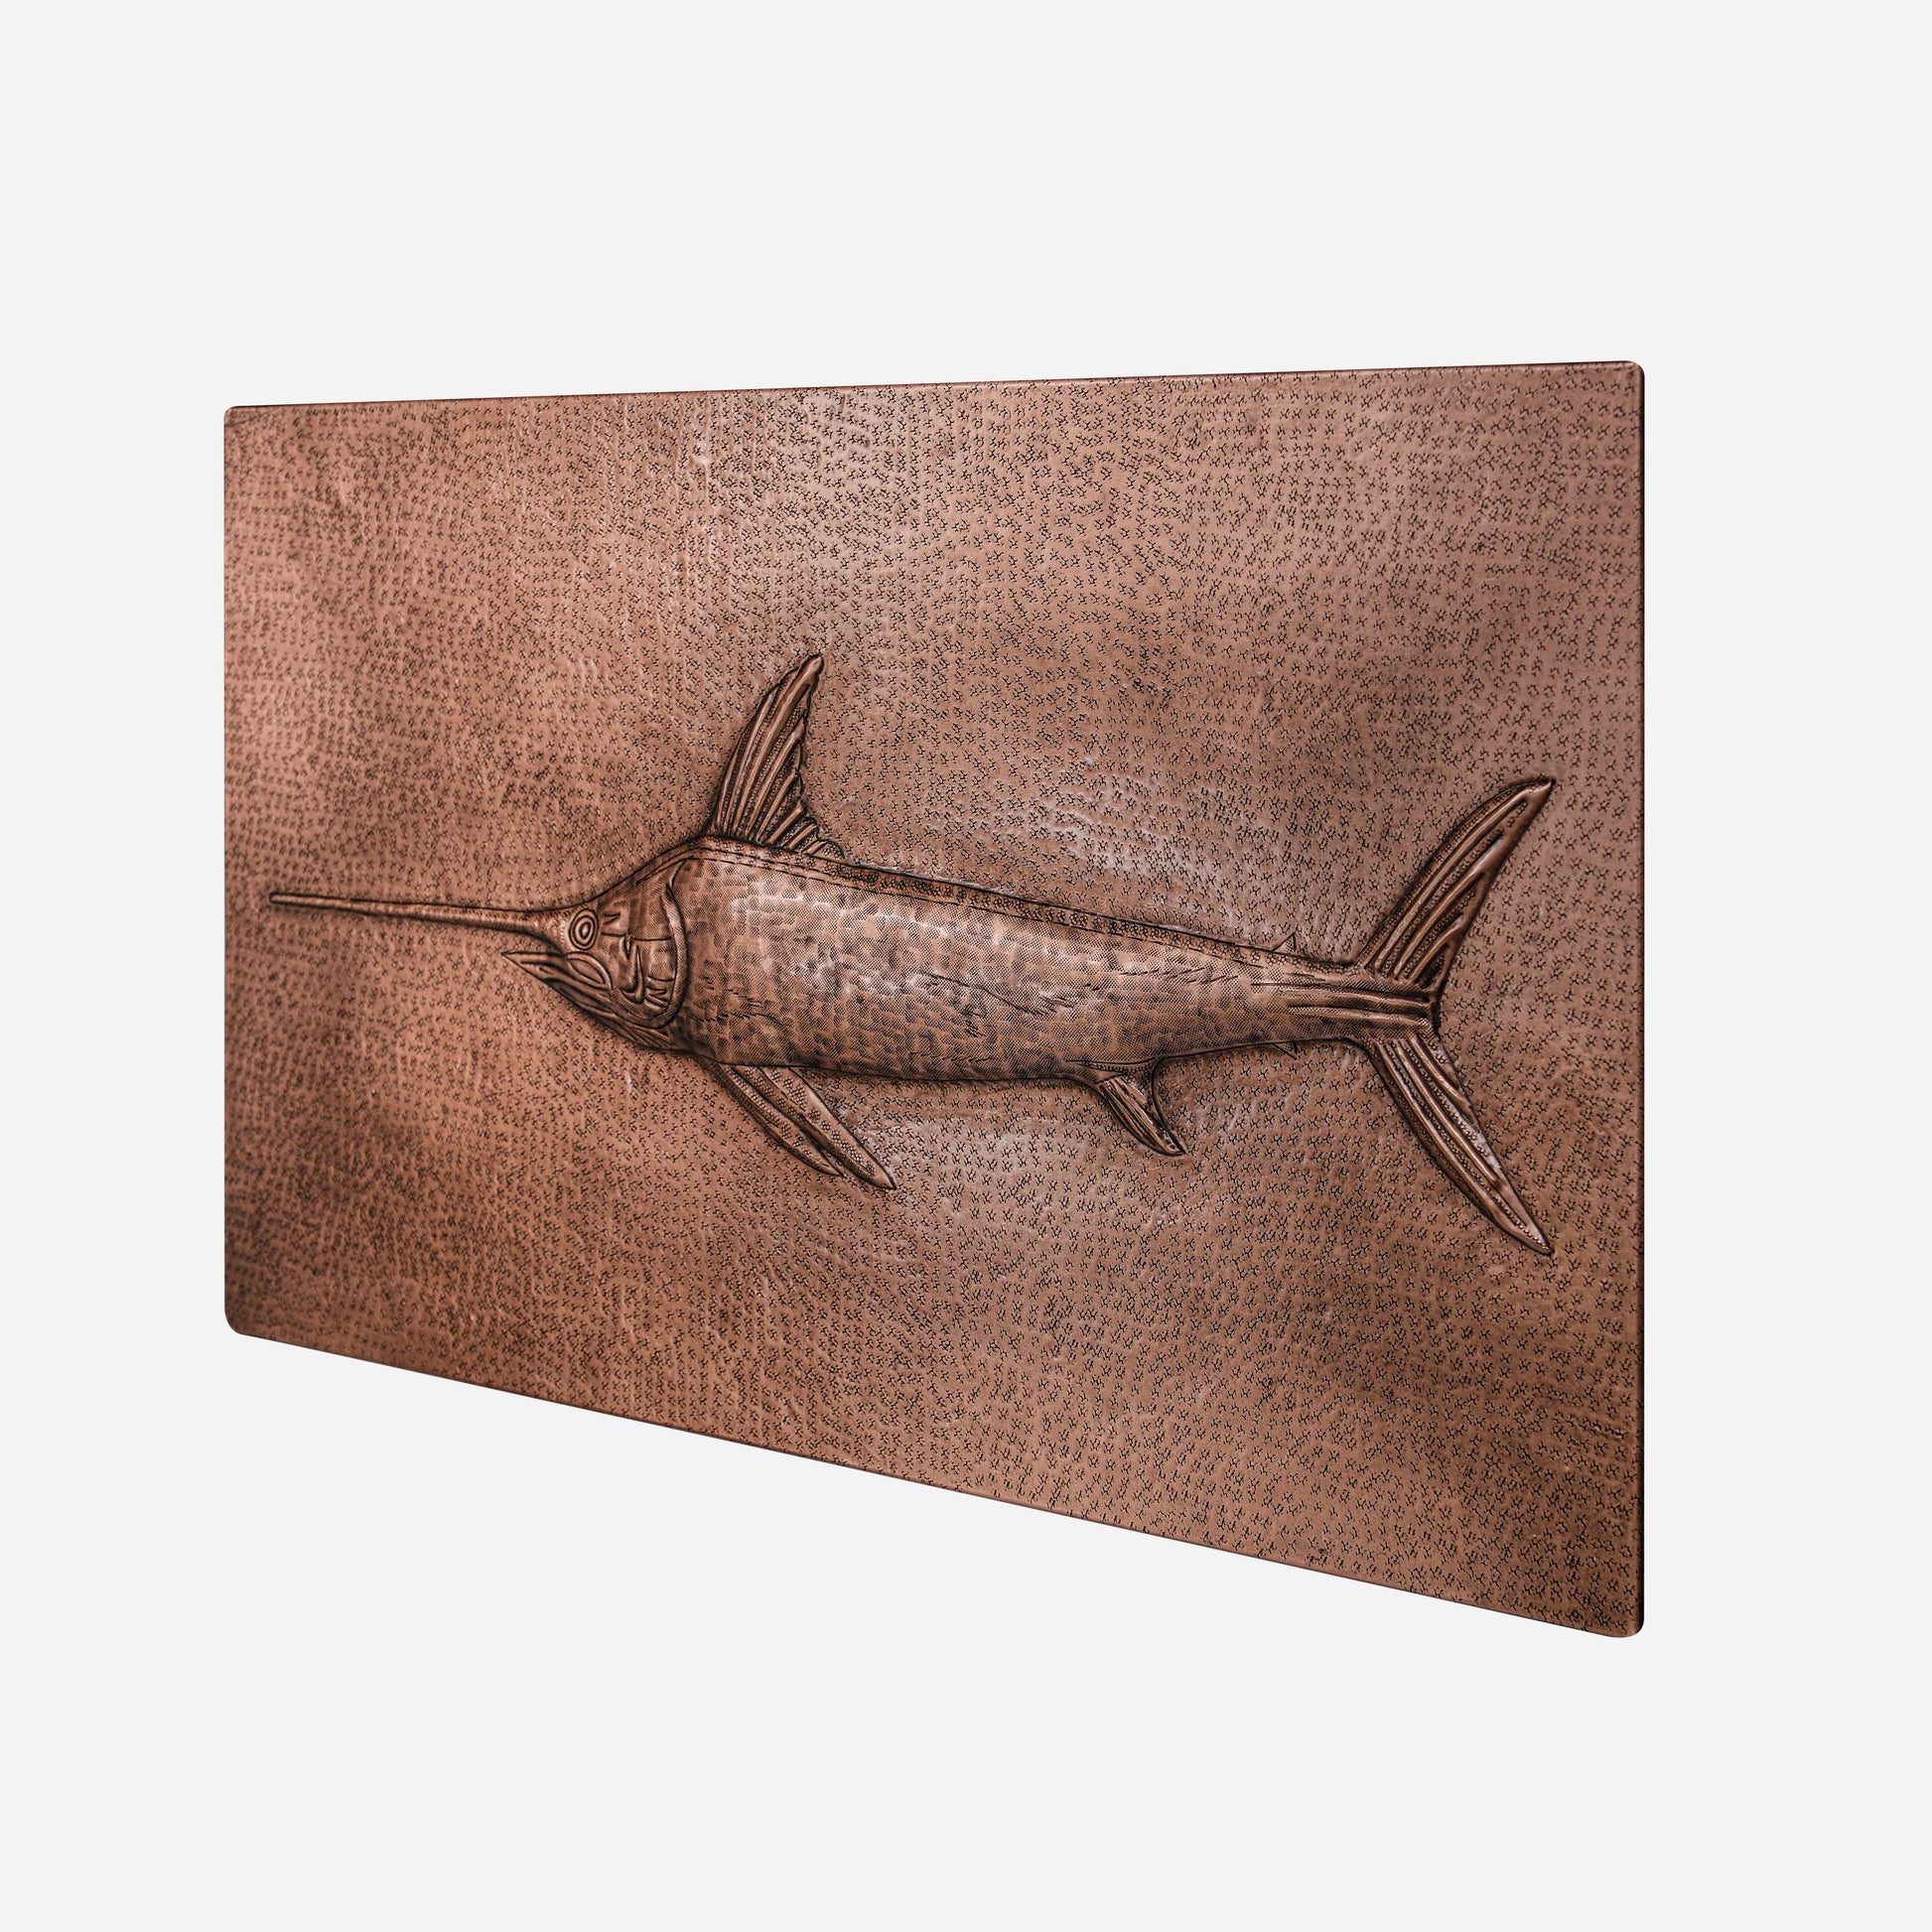 Copper Backsplash Panel (Swordfish)